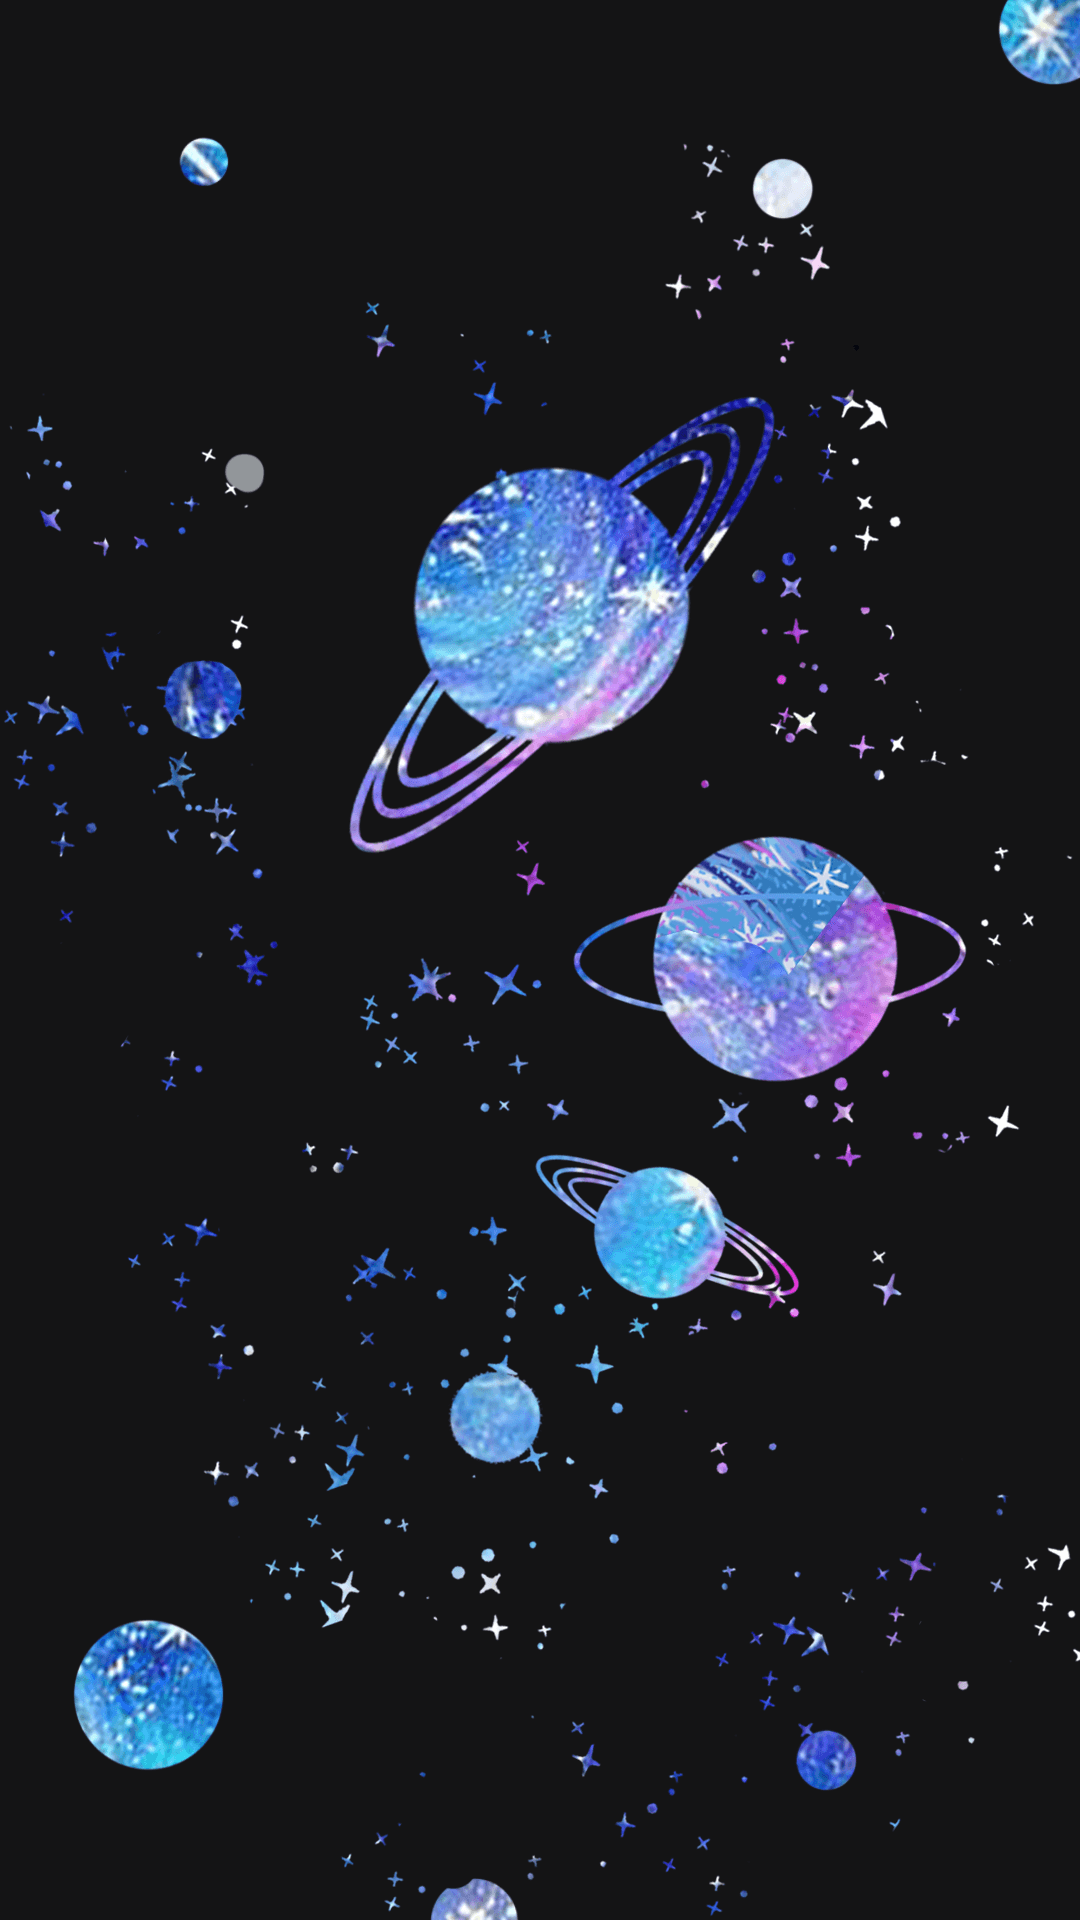 Dark iPhone wallpaper. Planets wallpaper, Wallpaper space, Galaxy